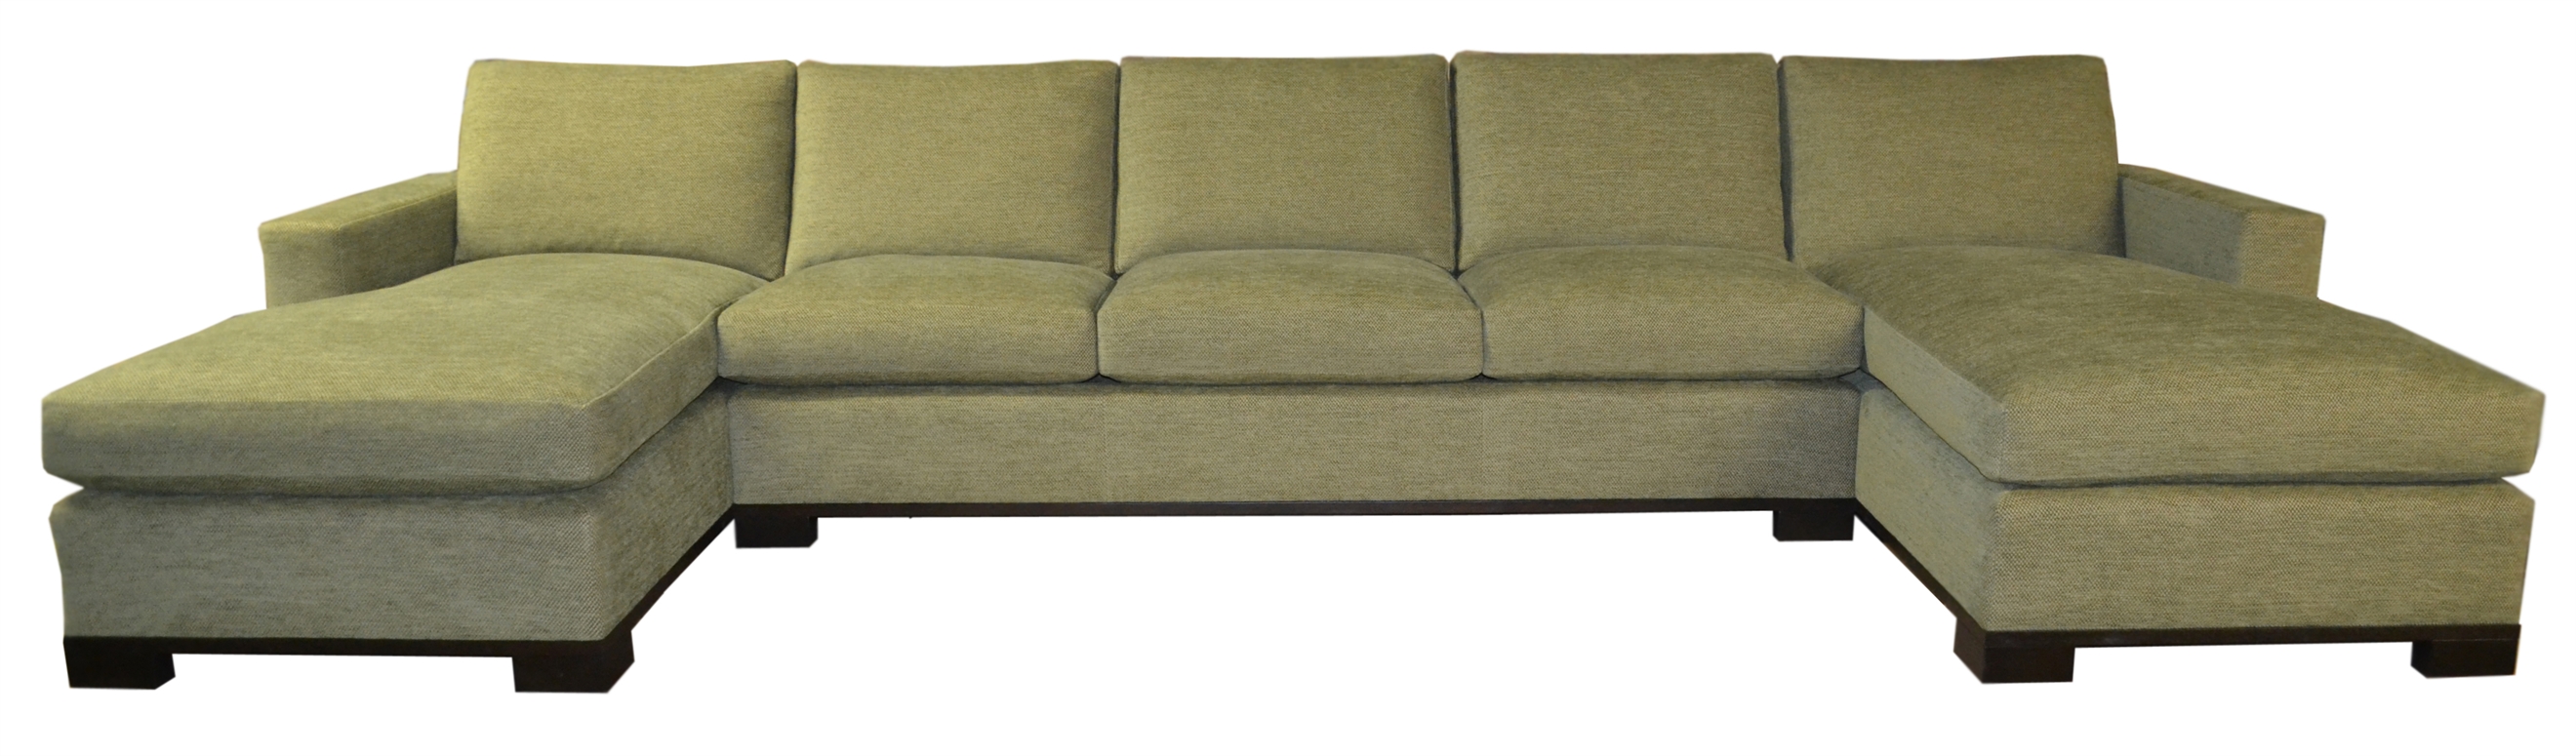 Custom Sectional Sofa with Back Table